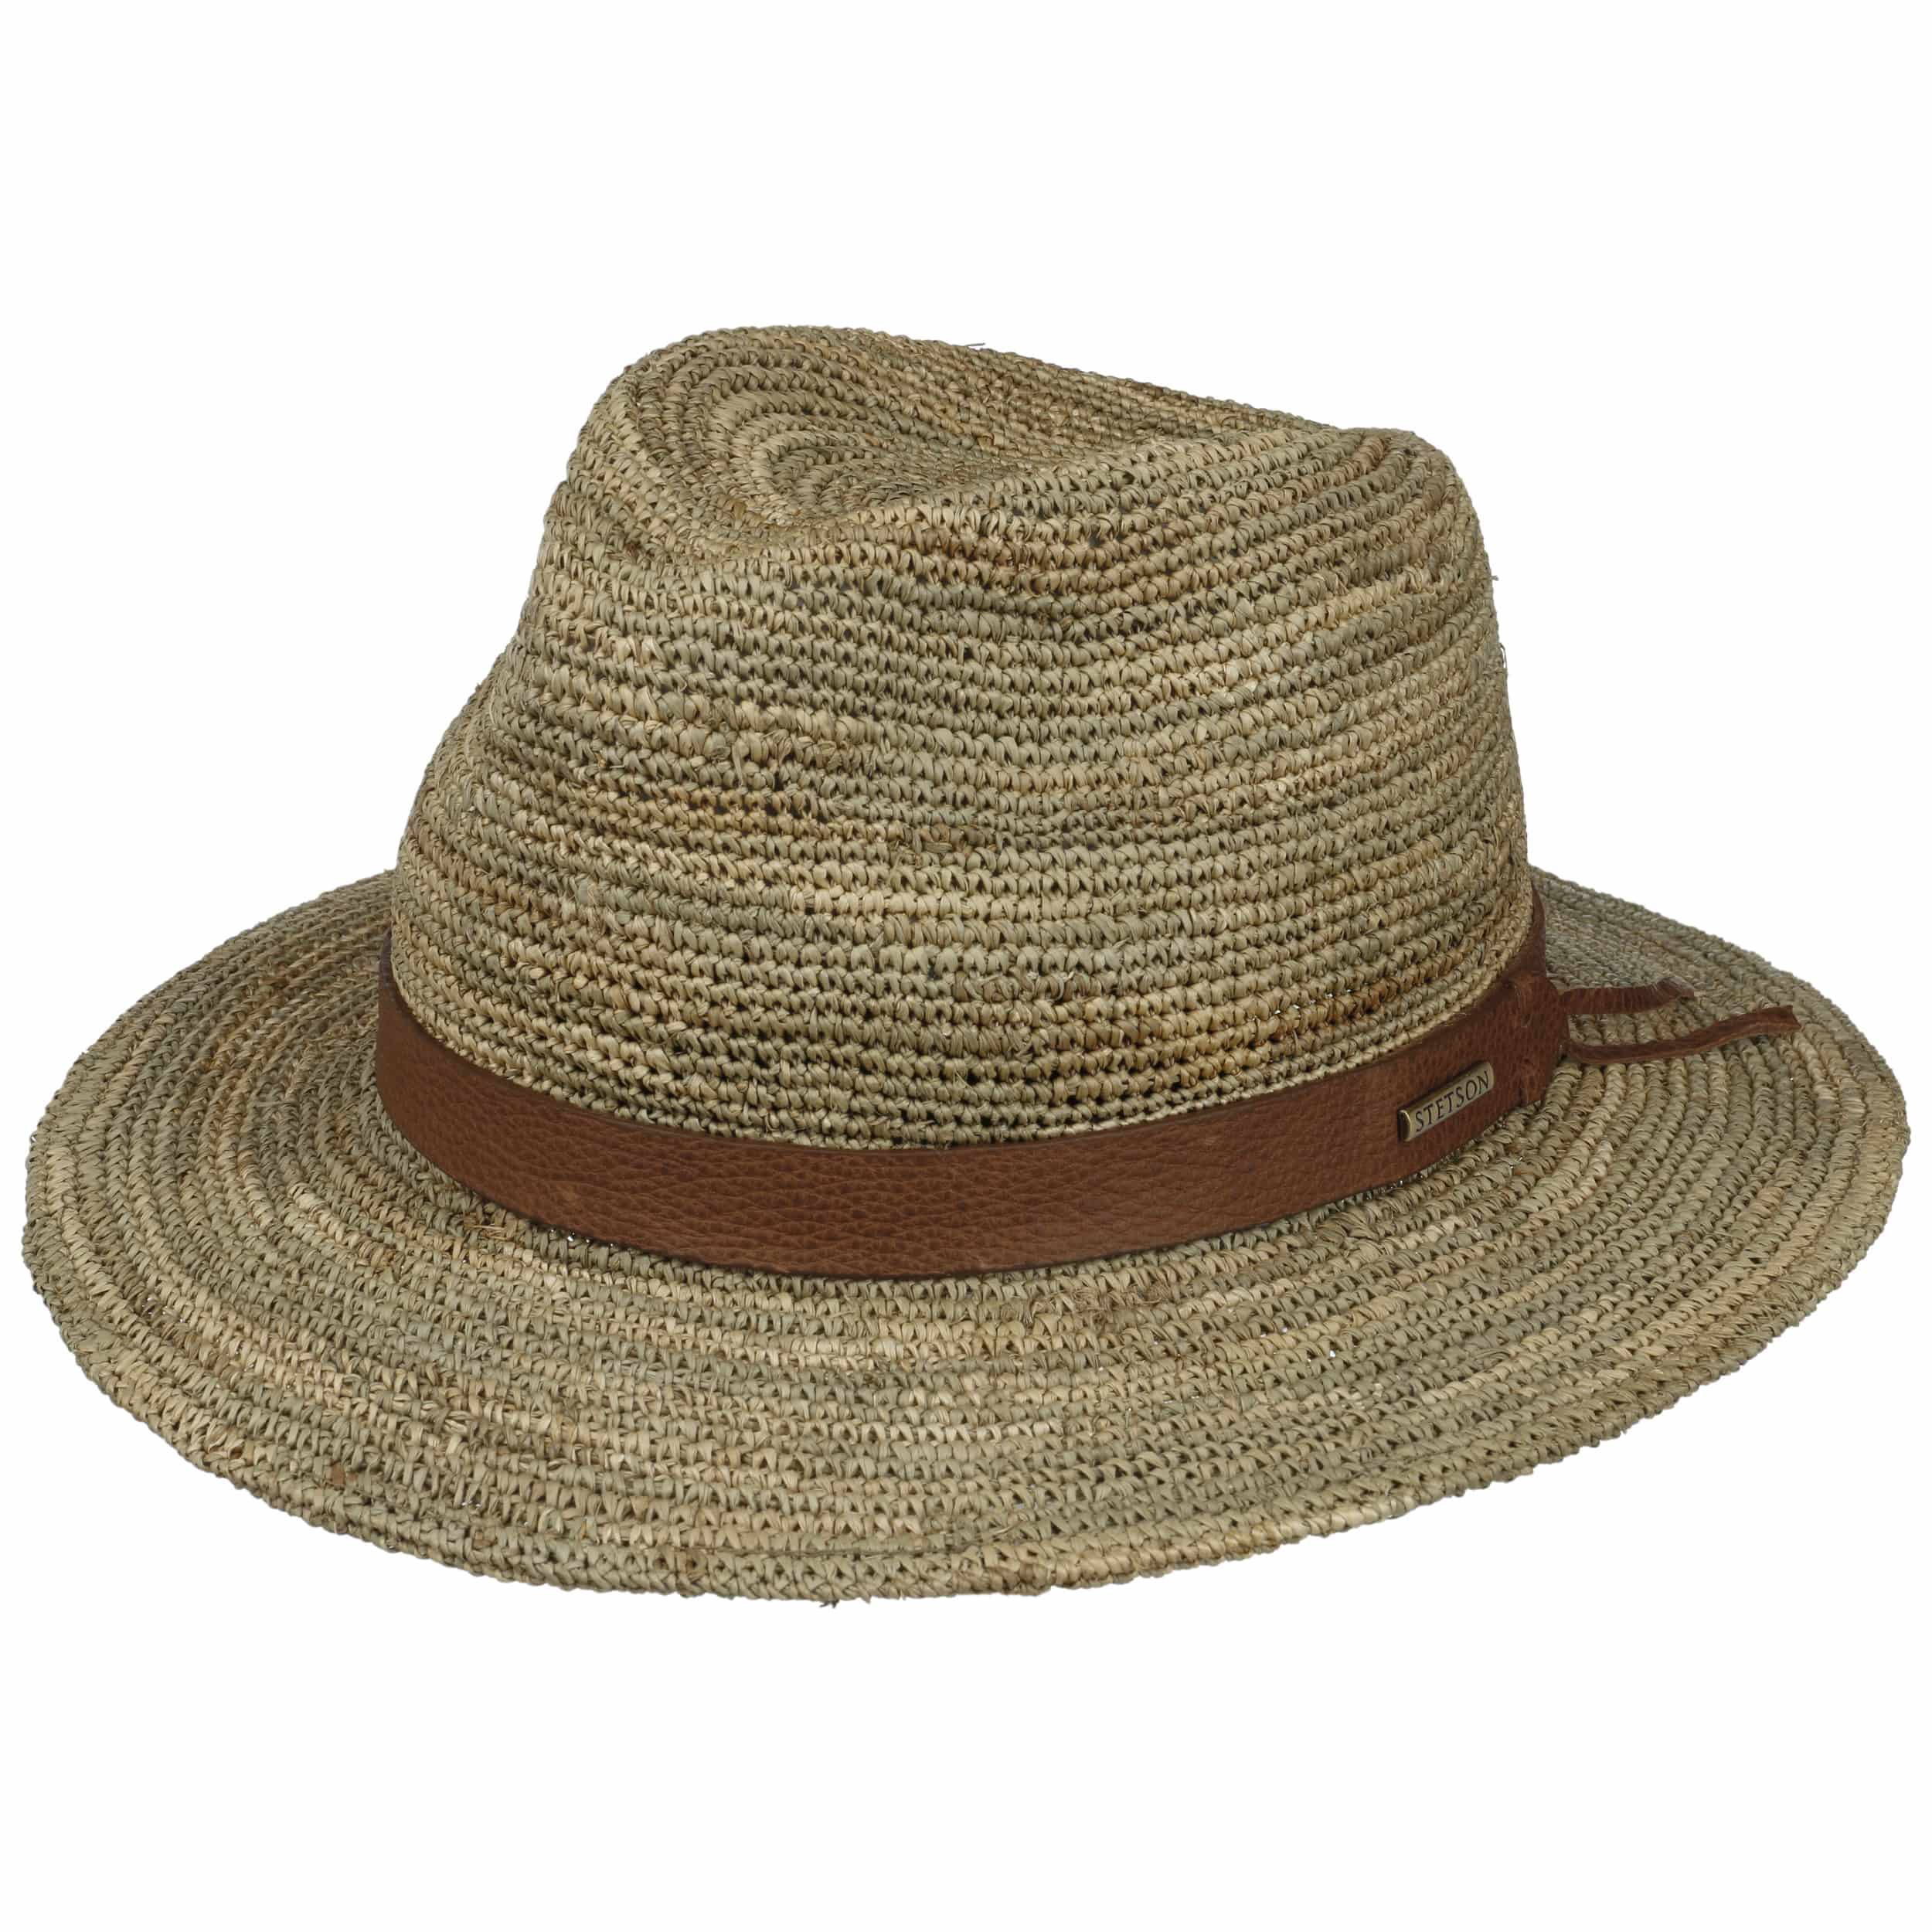 Crochet Seagrass Traveller Hat by Stetson - 129,00